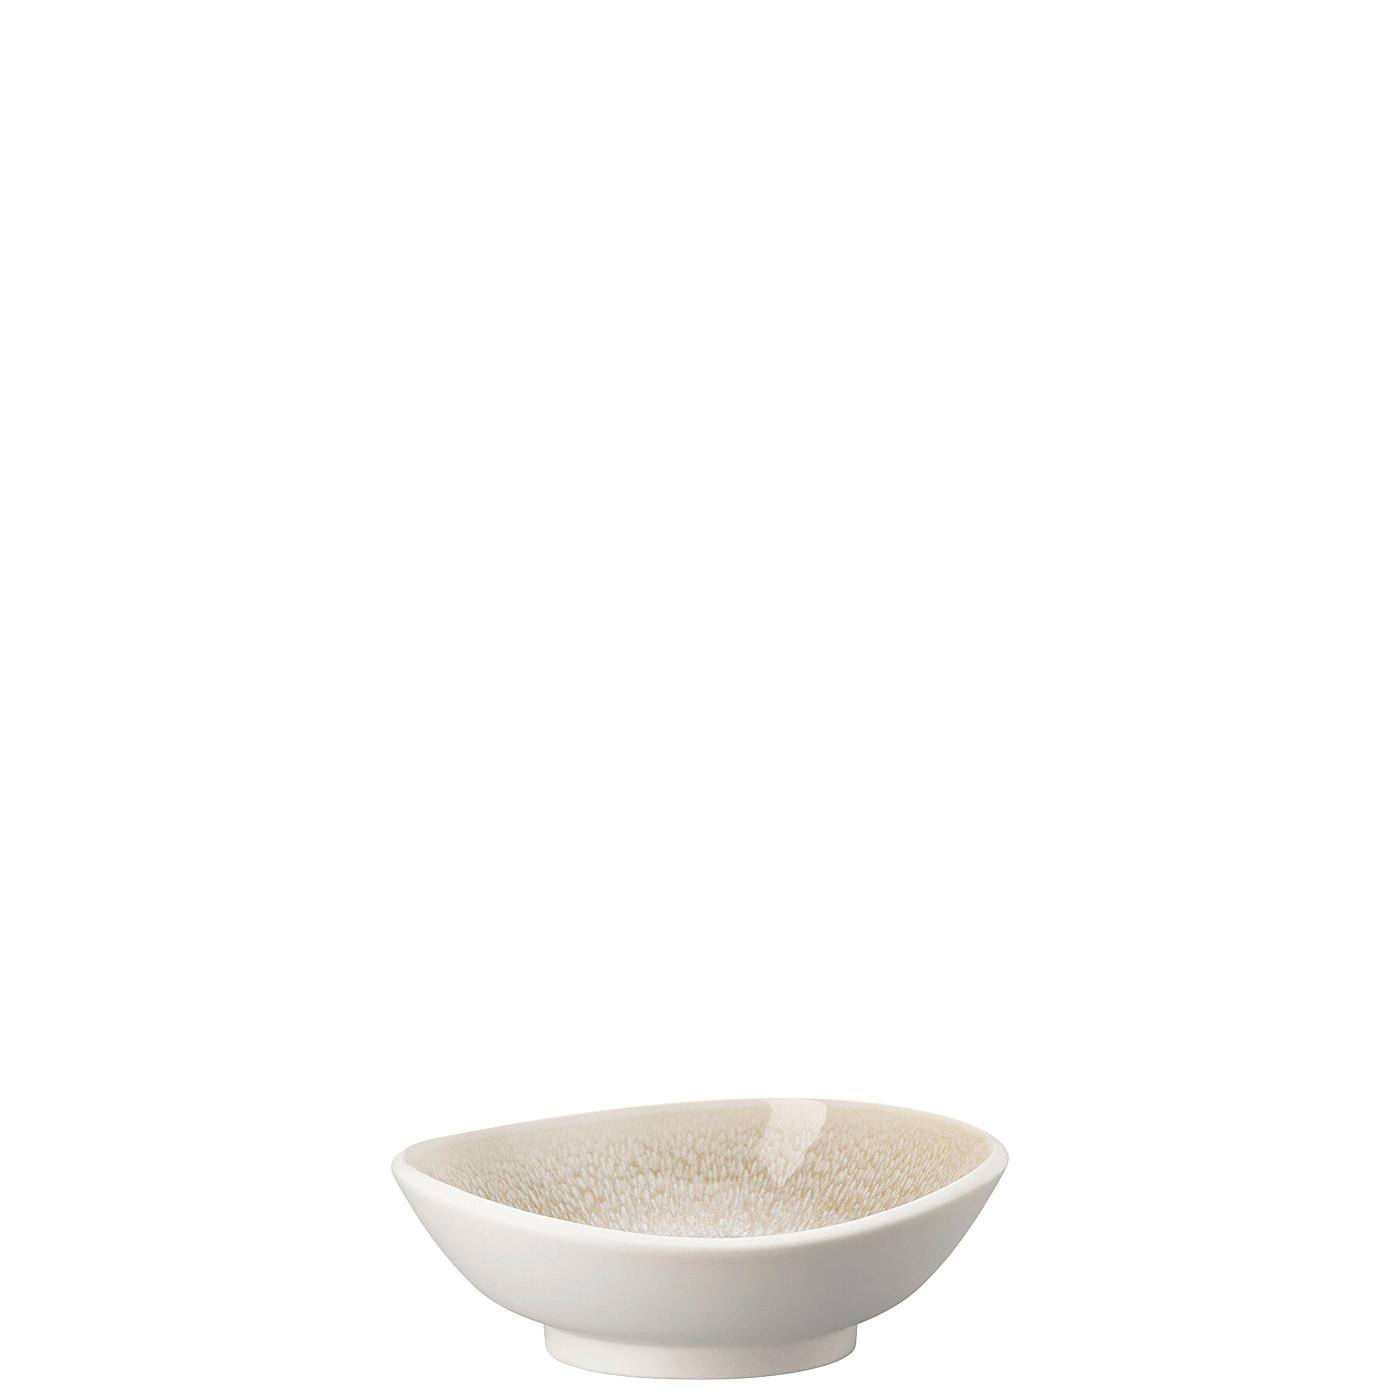 SCHALE Junto Dune 15/14,5/4,8 cm  - Beige, LIFESTYLE, Keramik (15/14,5/4,8cm) - Rosenthal